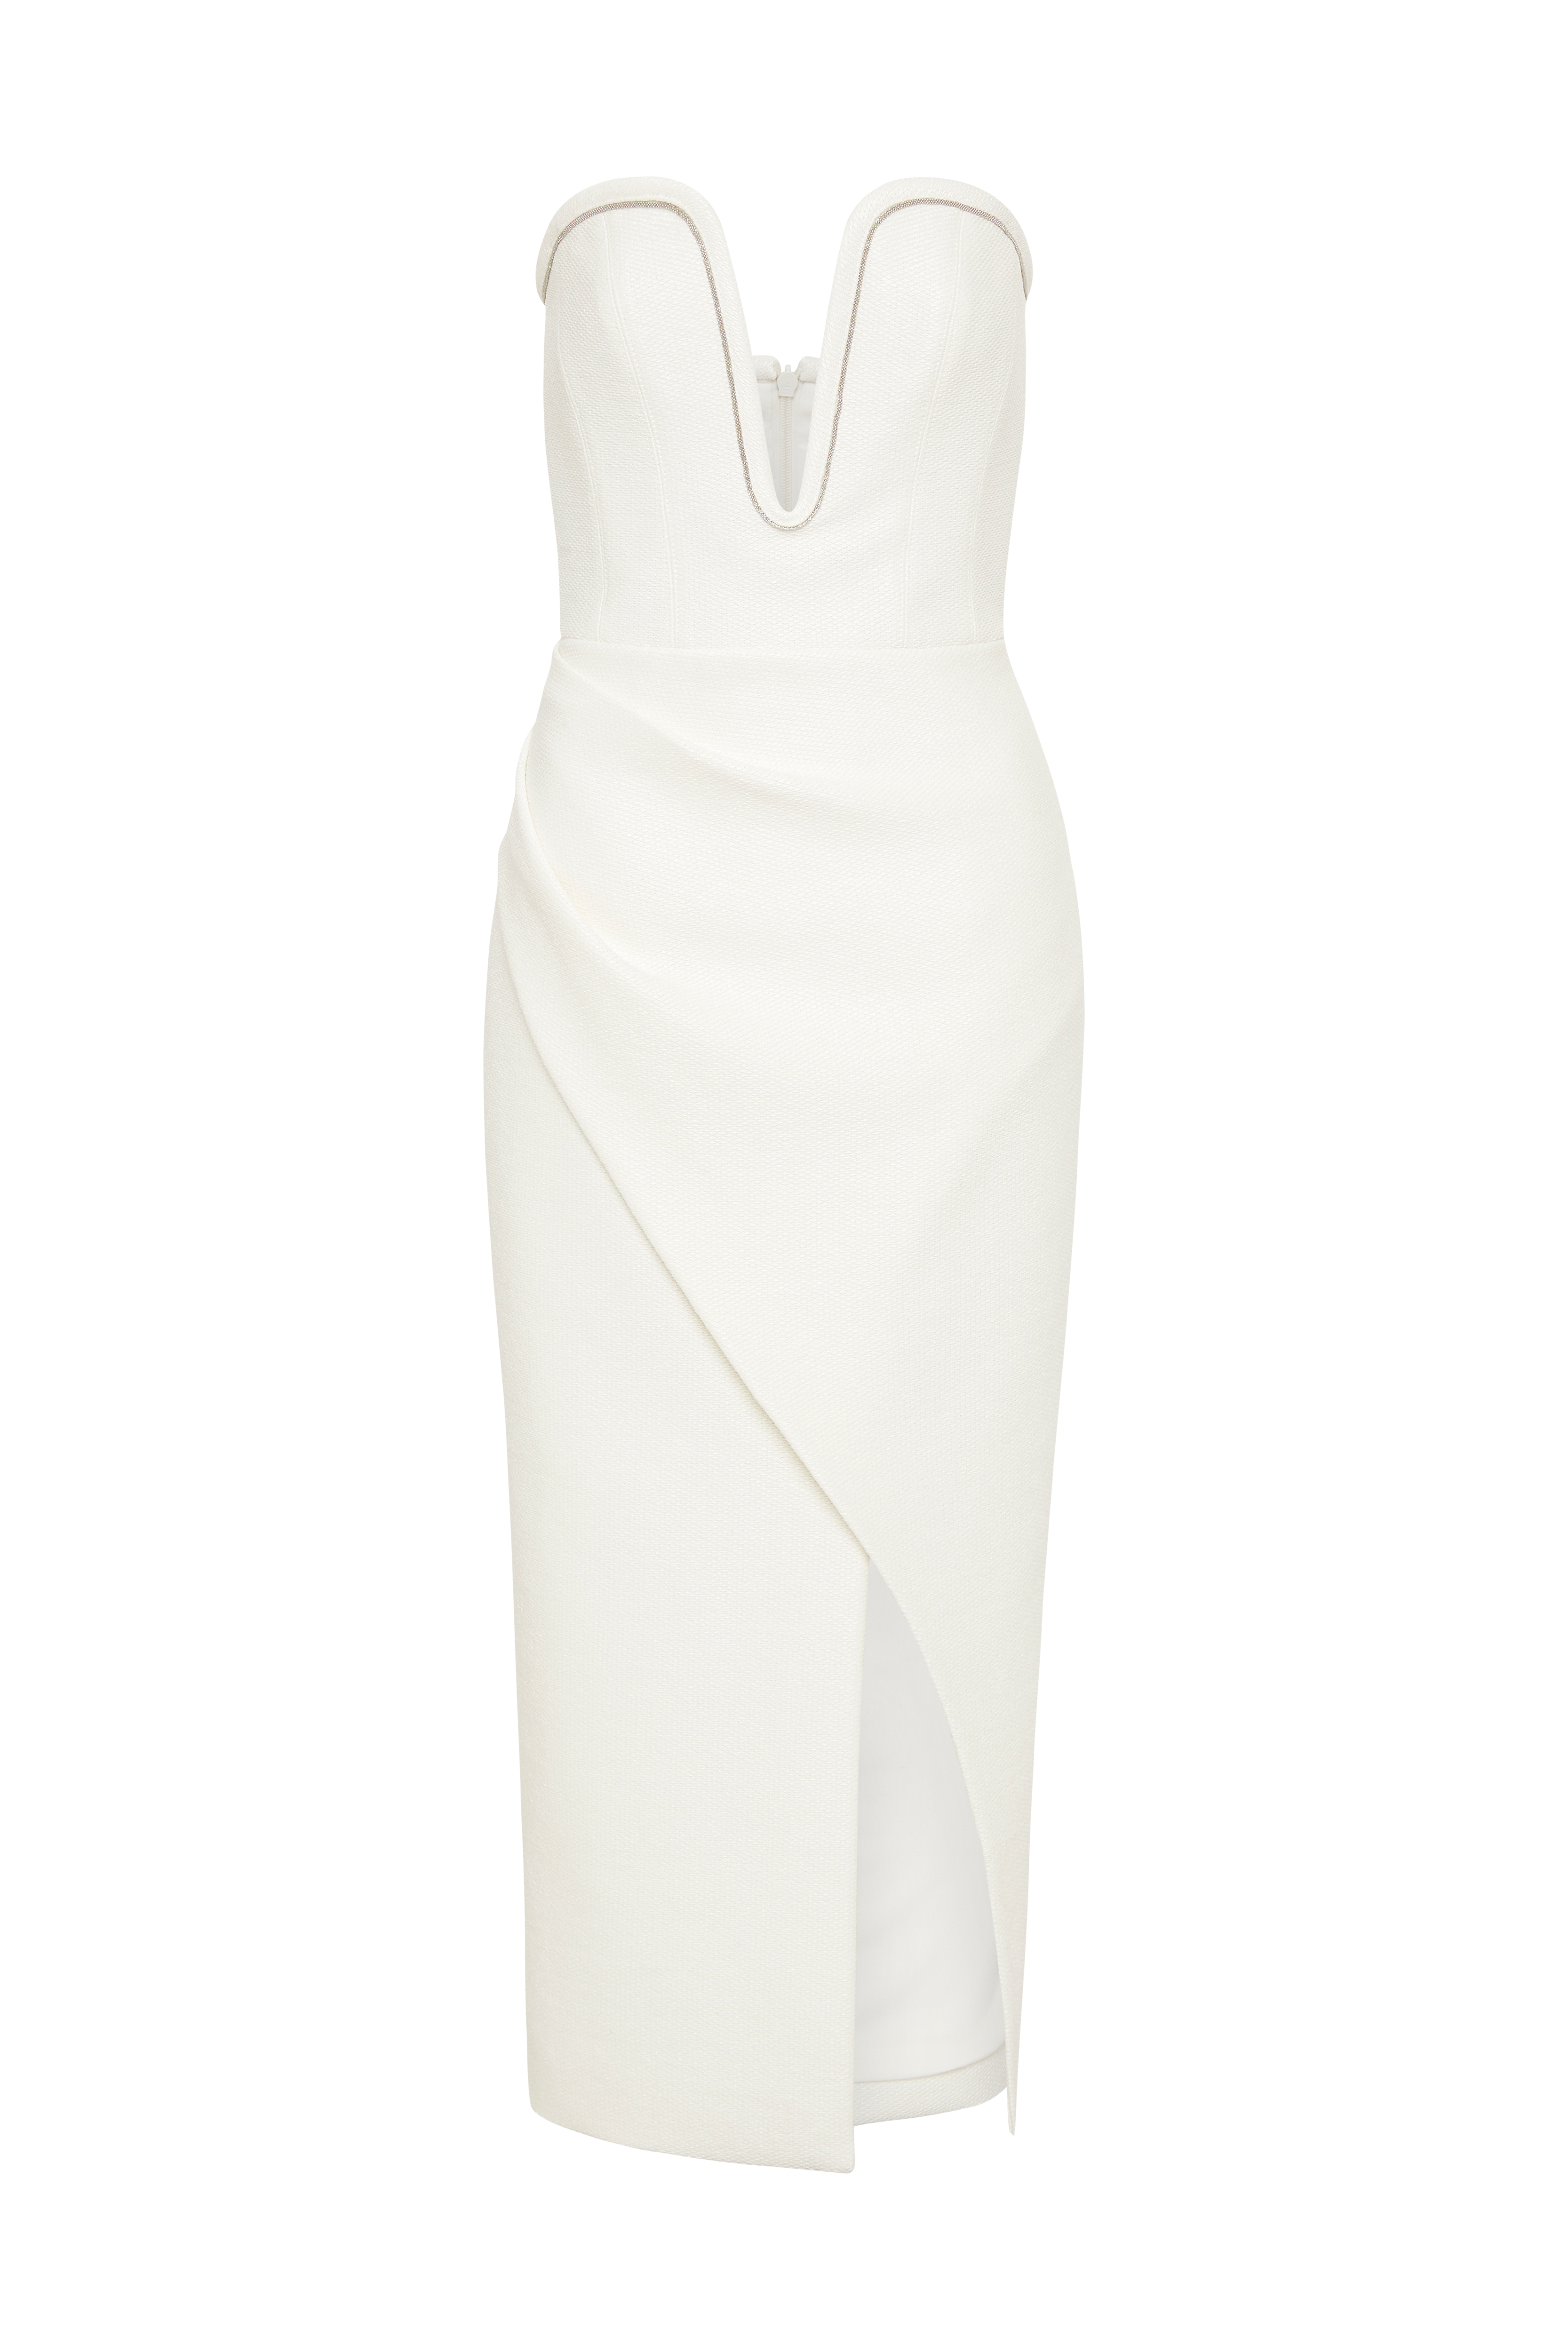 Manning Cartell Lace Pattern Long Dress - White Dresses, Clothing -  WMC21056